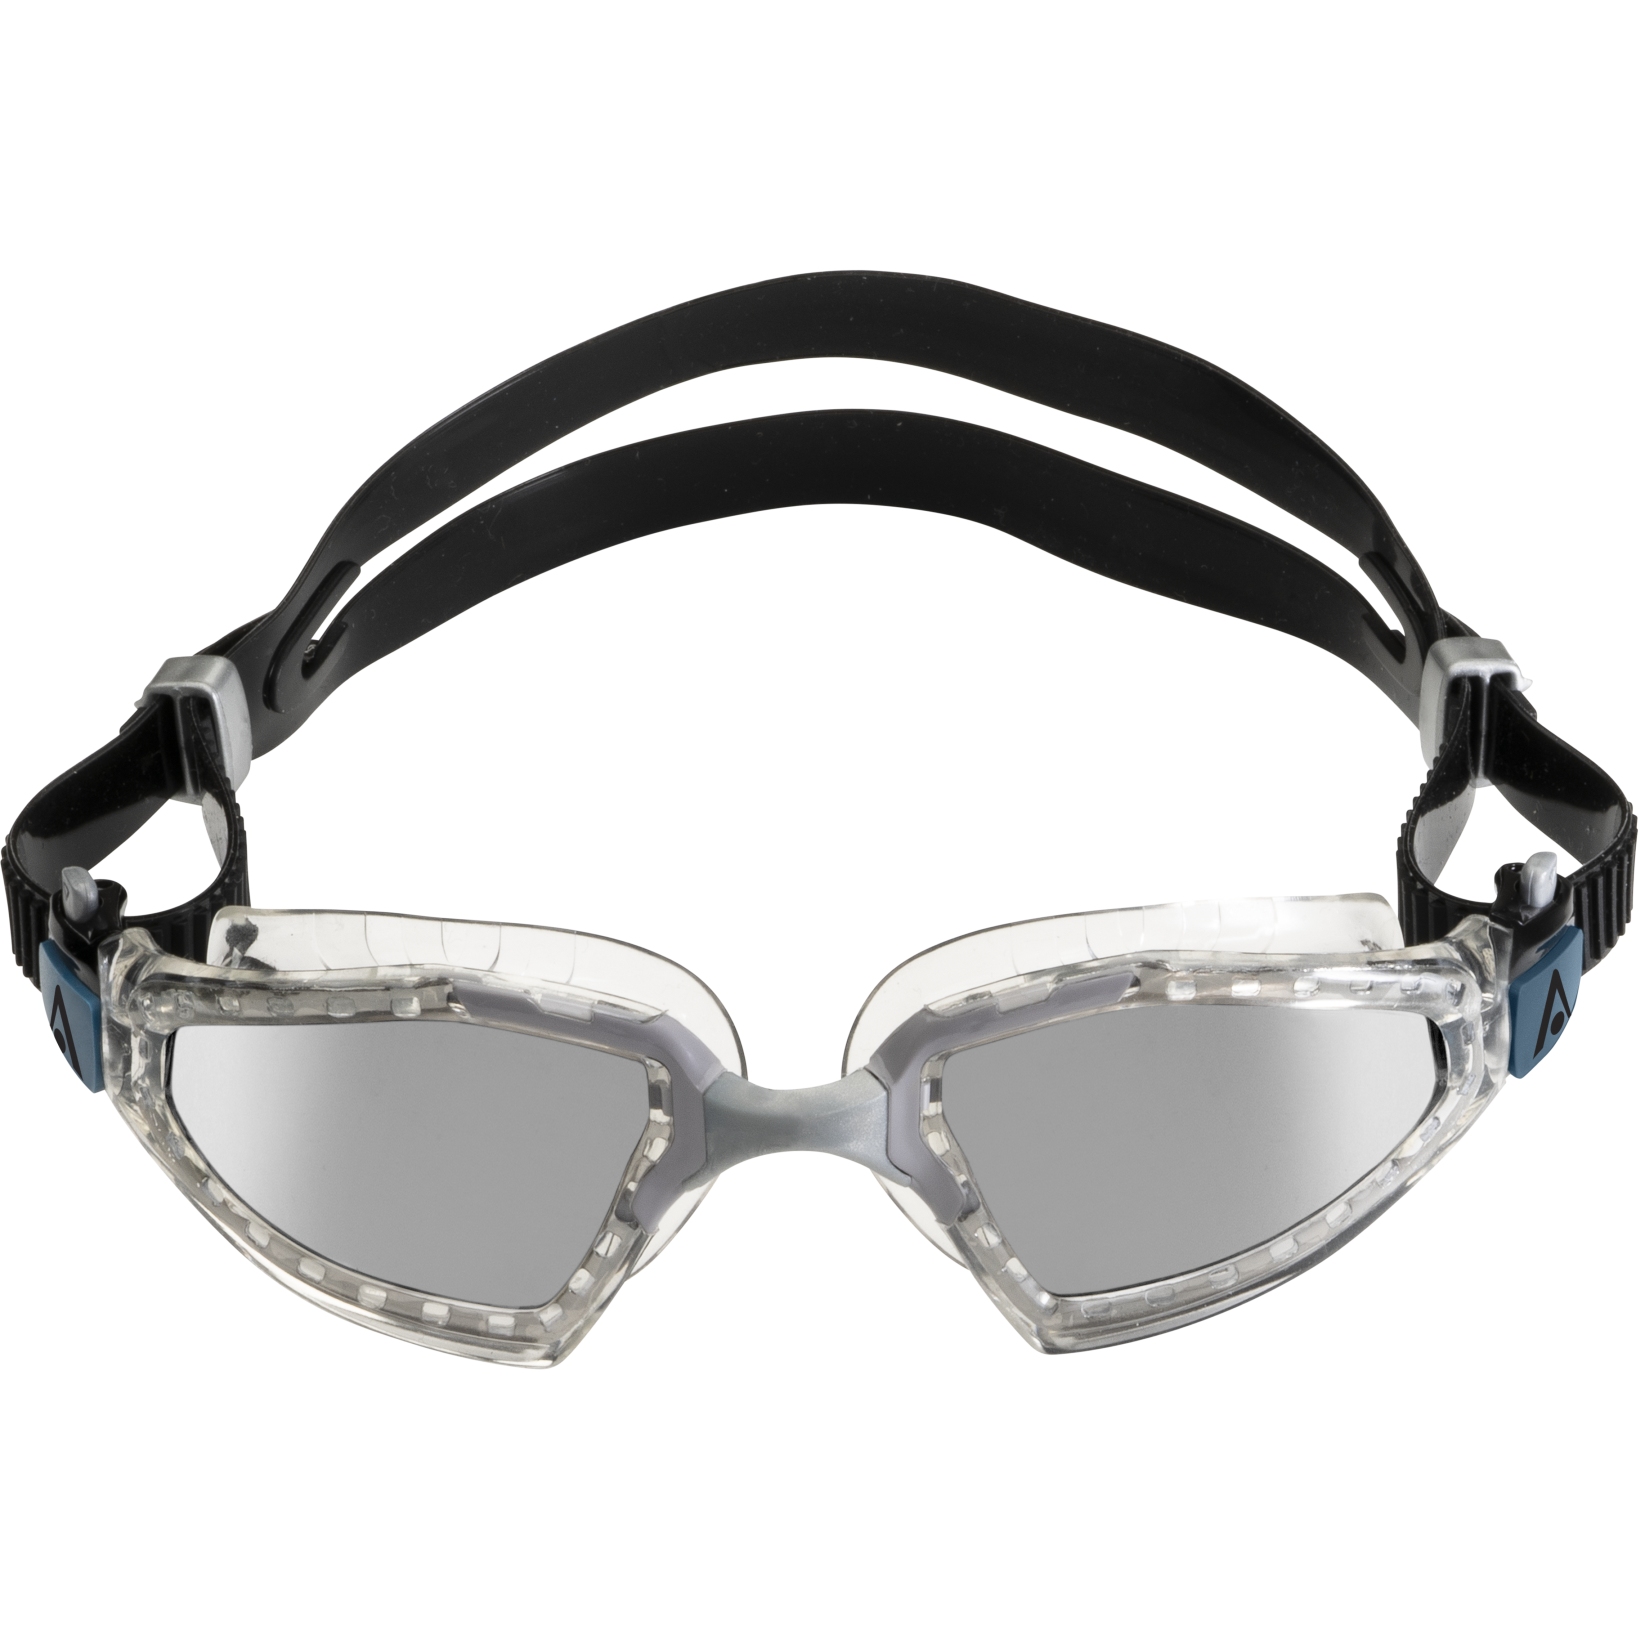 Productfoto van AQUASPHERE Kayenne Pro Zwembril - Zilver Titaan gespiegeld - Transparent/Gray